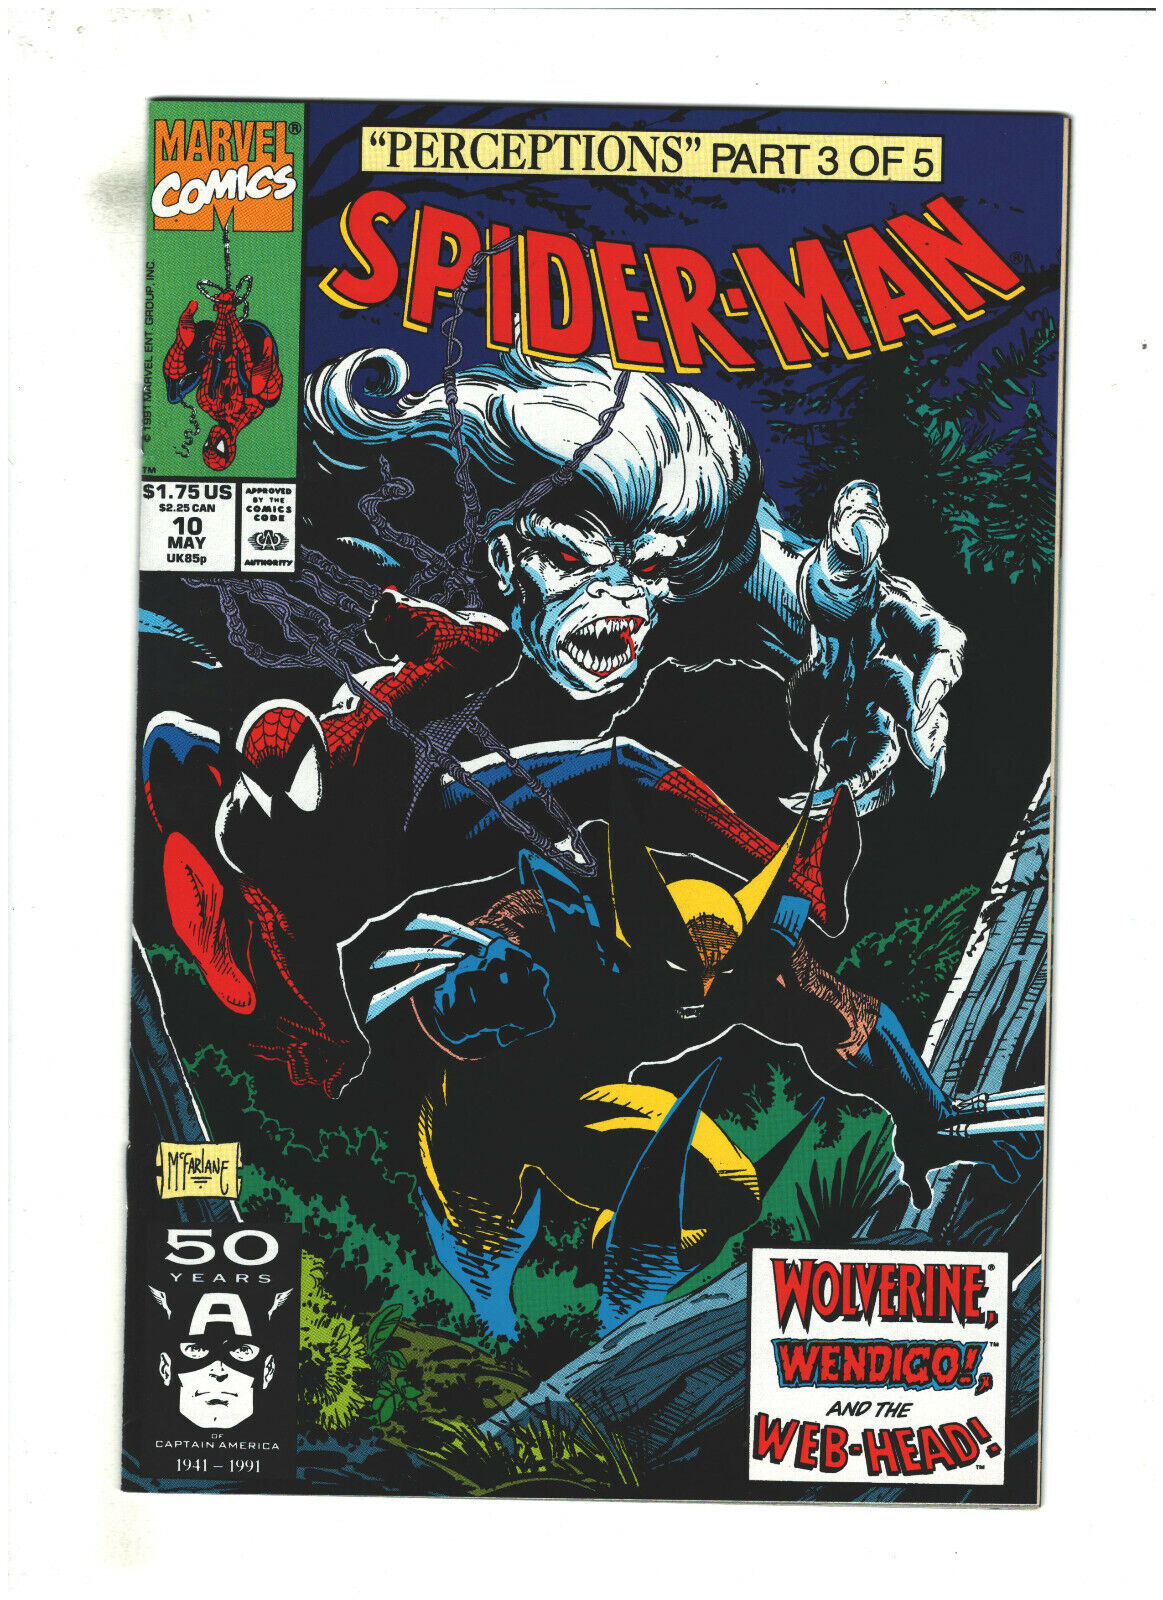 Spider-man #10 NM- 9.2 Marvel Comics 1991 Todd McFarlane, Perceptions, Wolverine